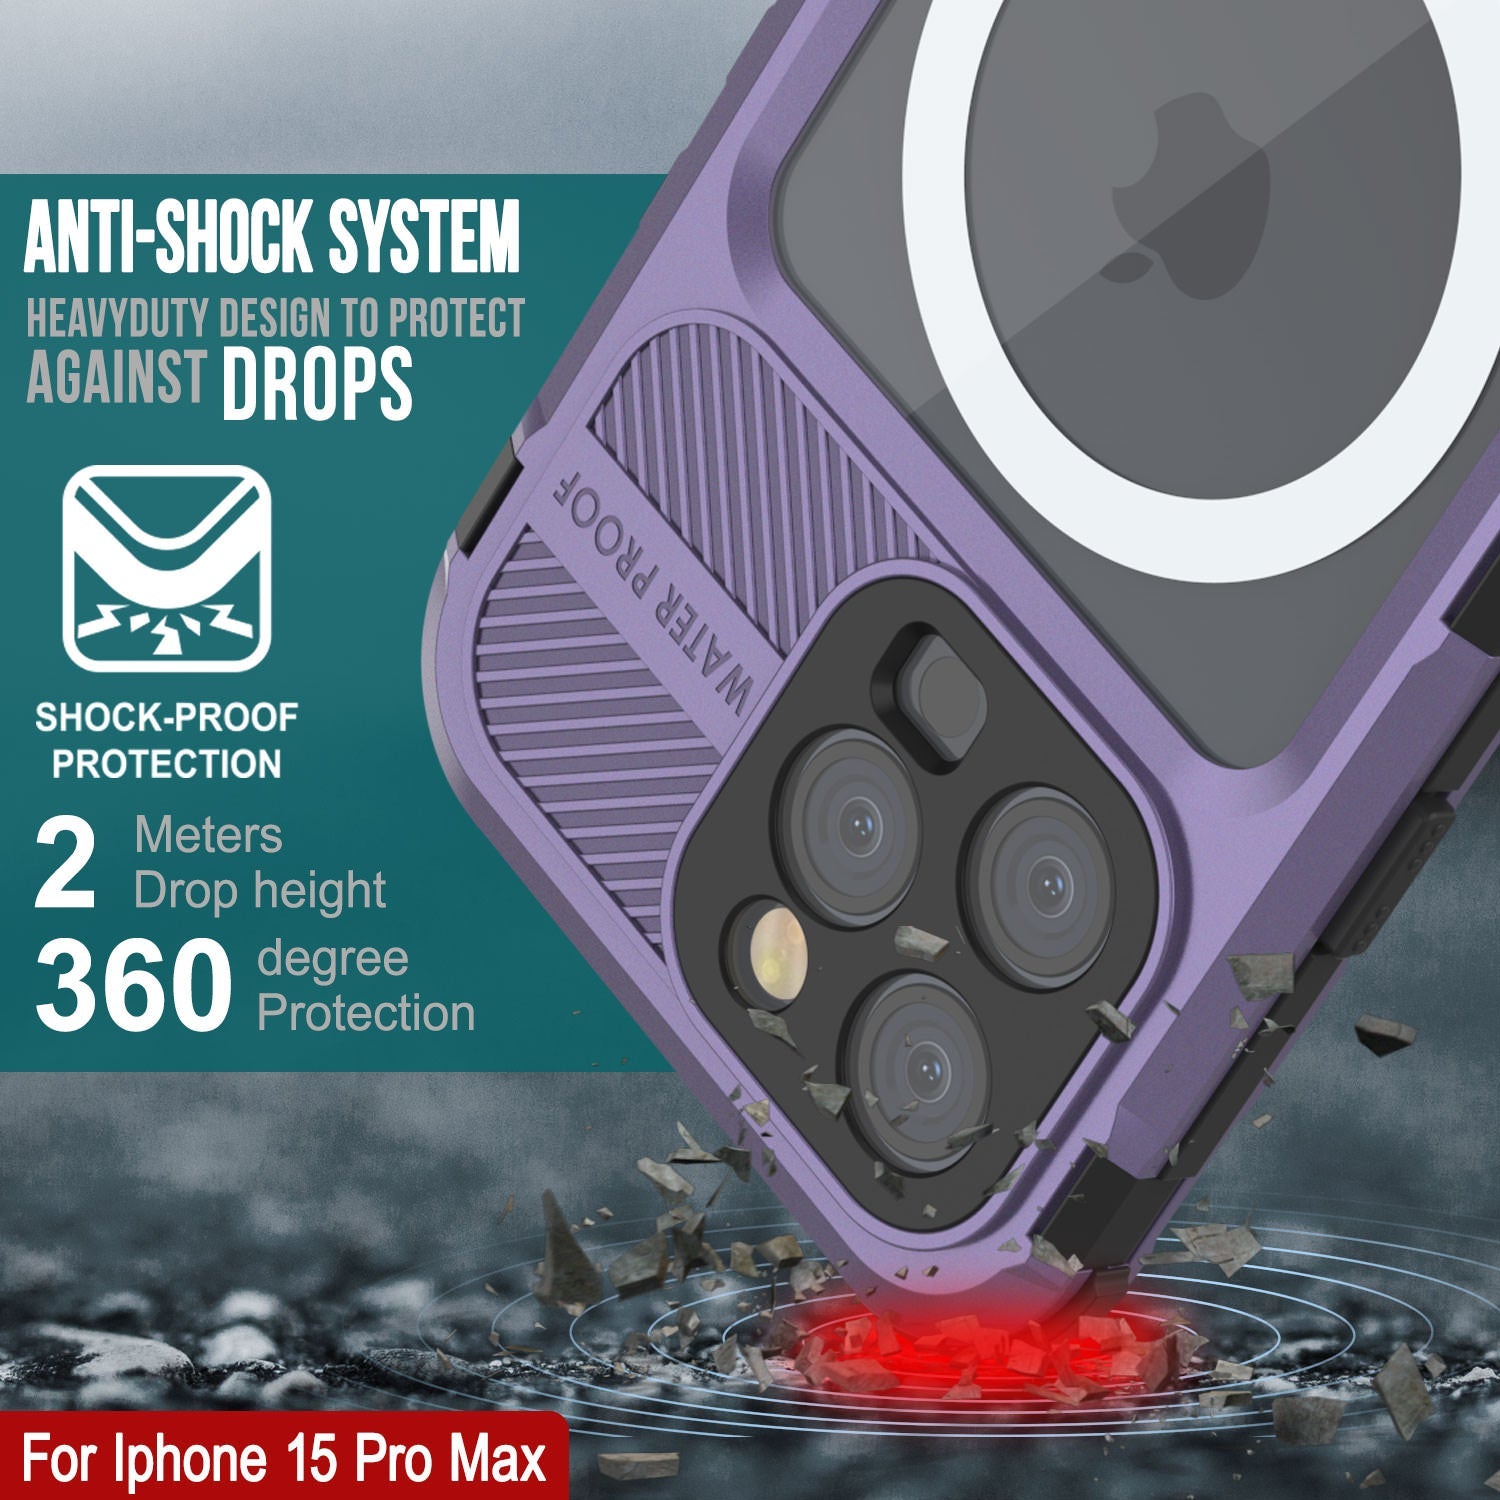 iPhone 14 Pro Max Metal Extreme 2.0 Series Aluminum Waterproof